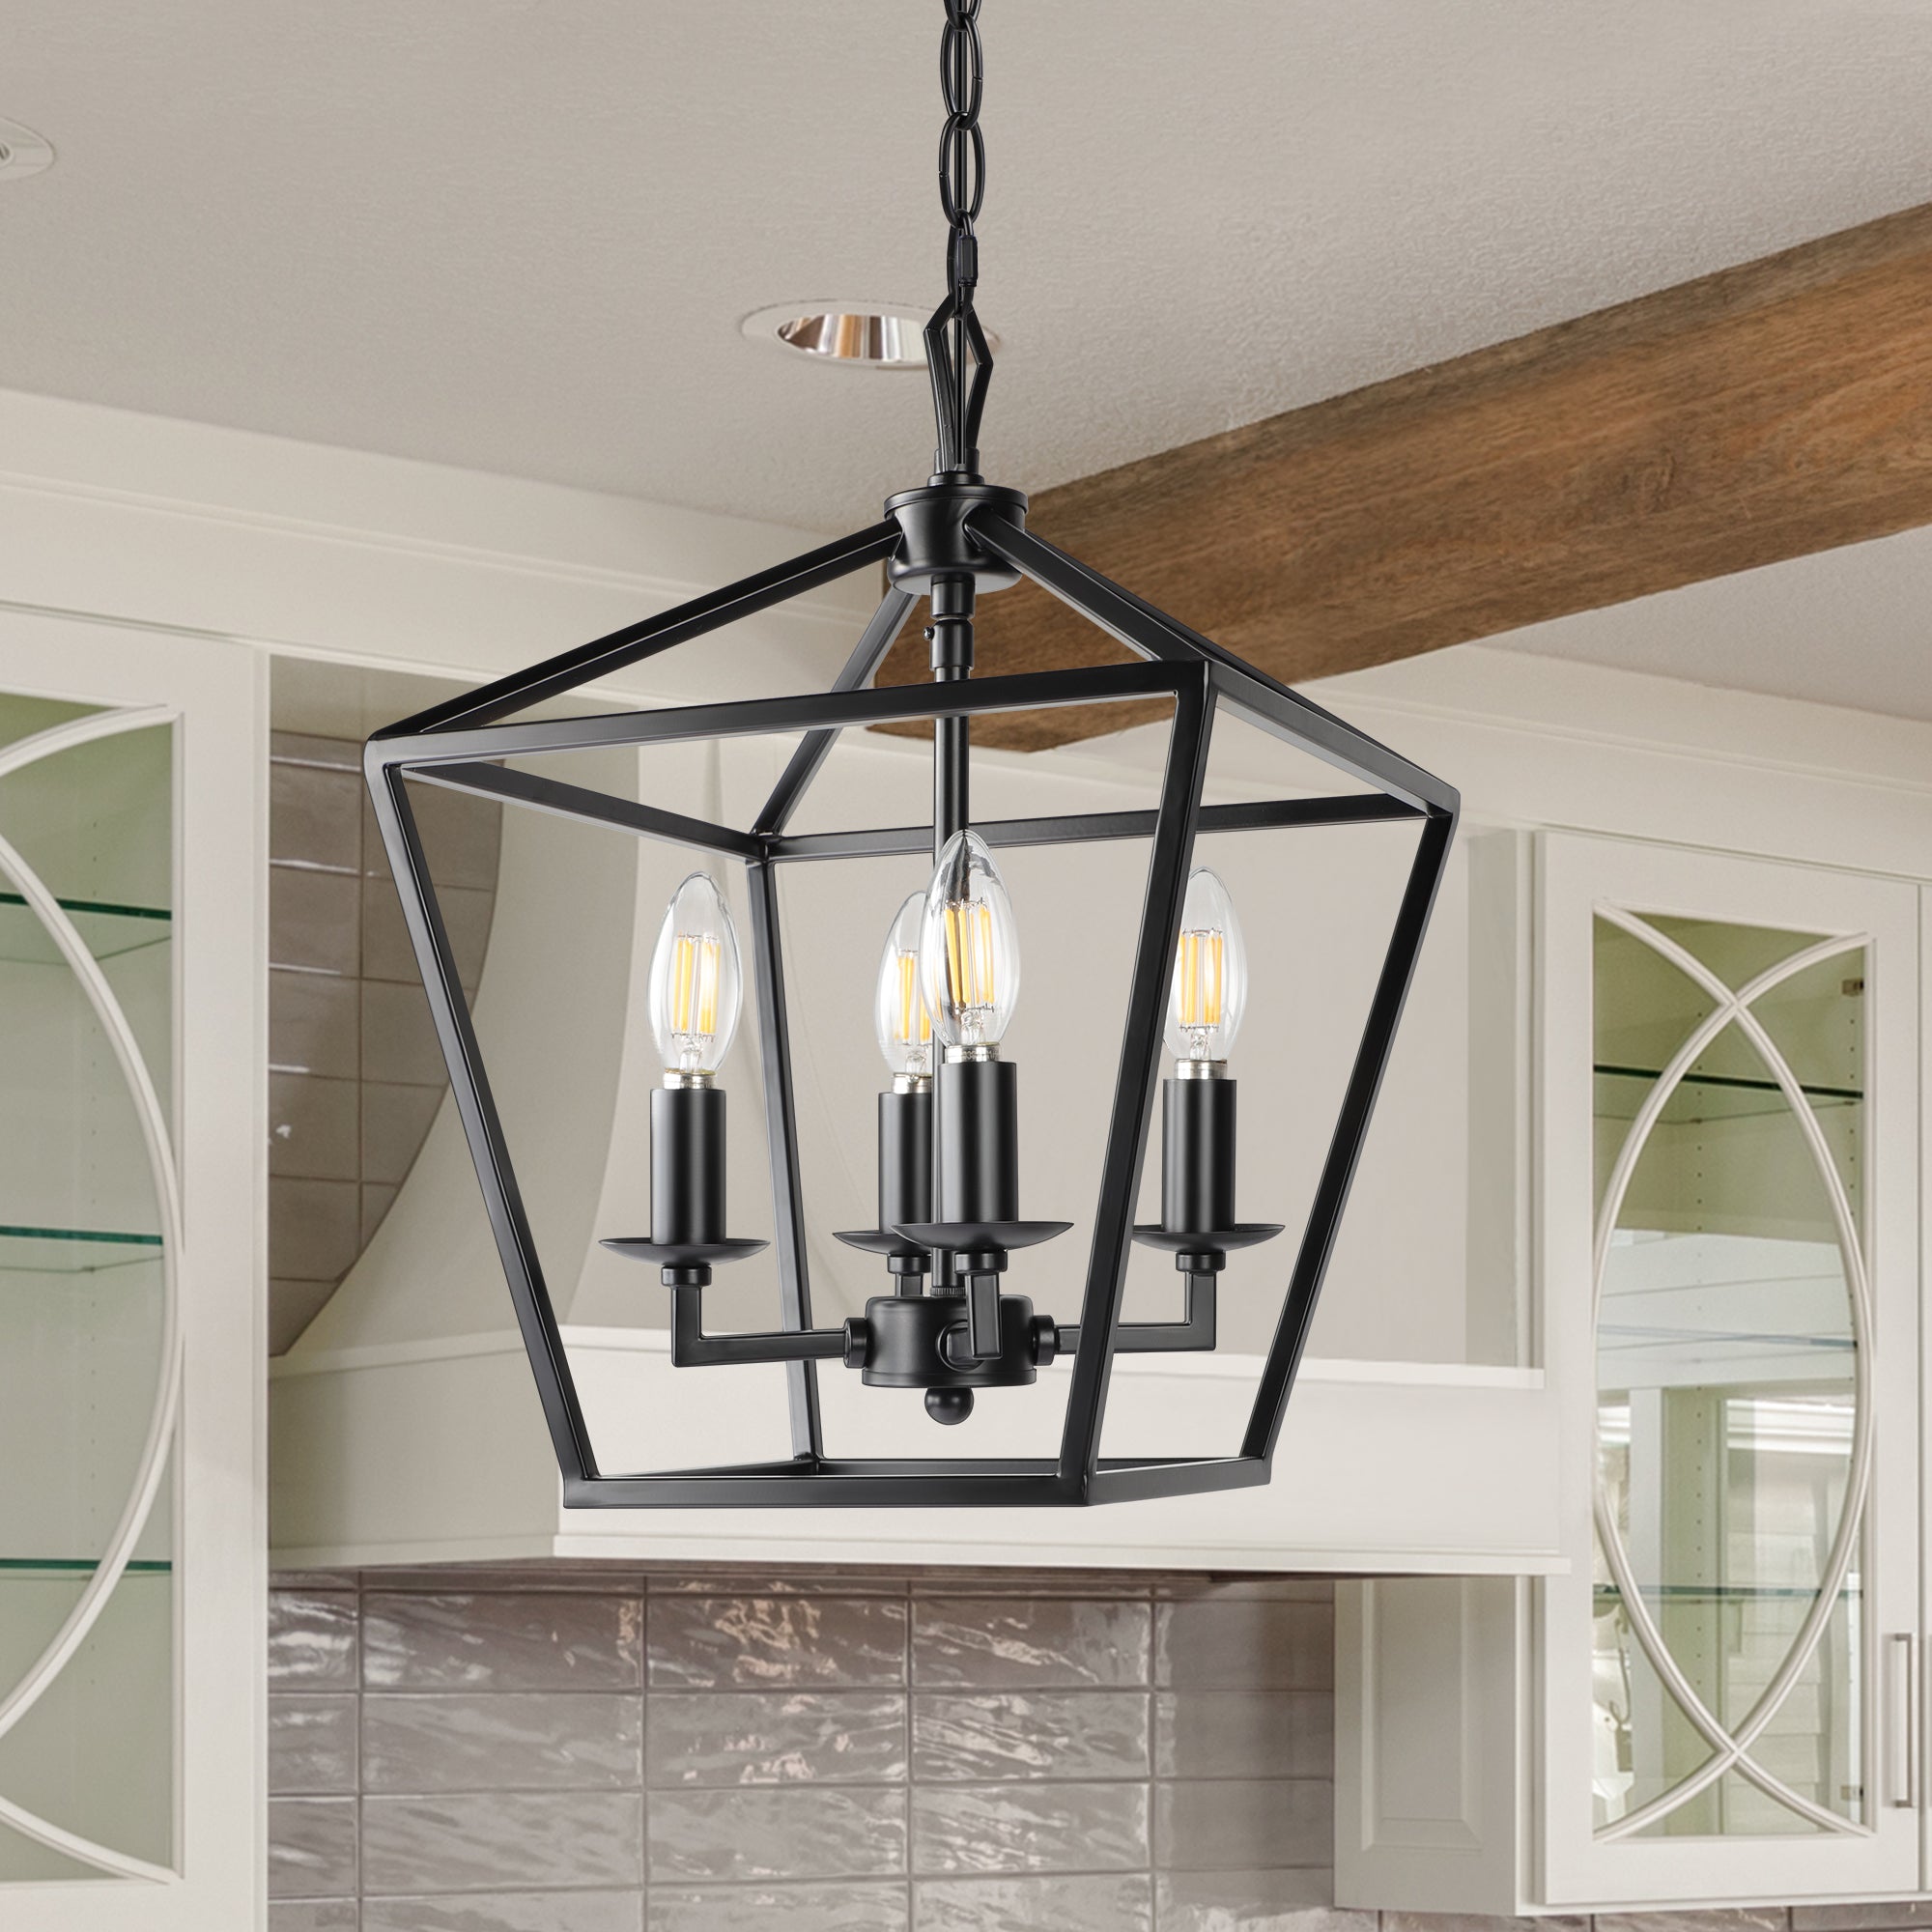 OUTON Pendant Light with 4 Light Black Metal Birdcage Kitchen Island Light for Dining Room living room